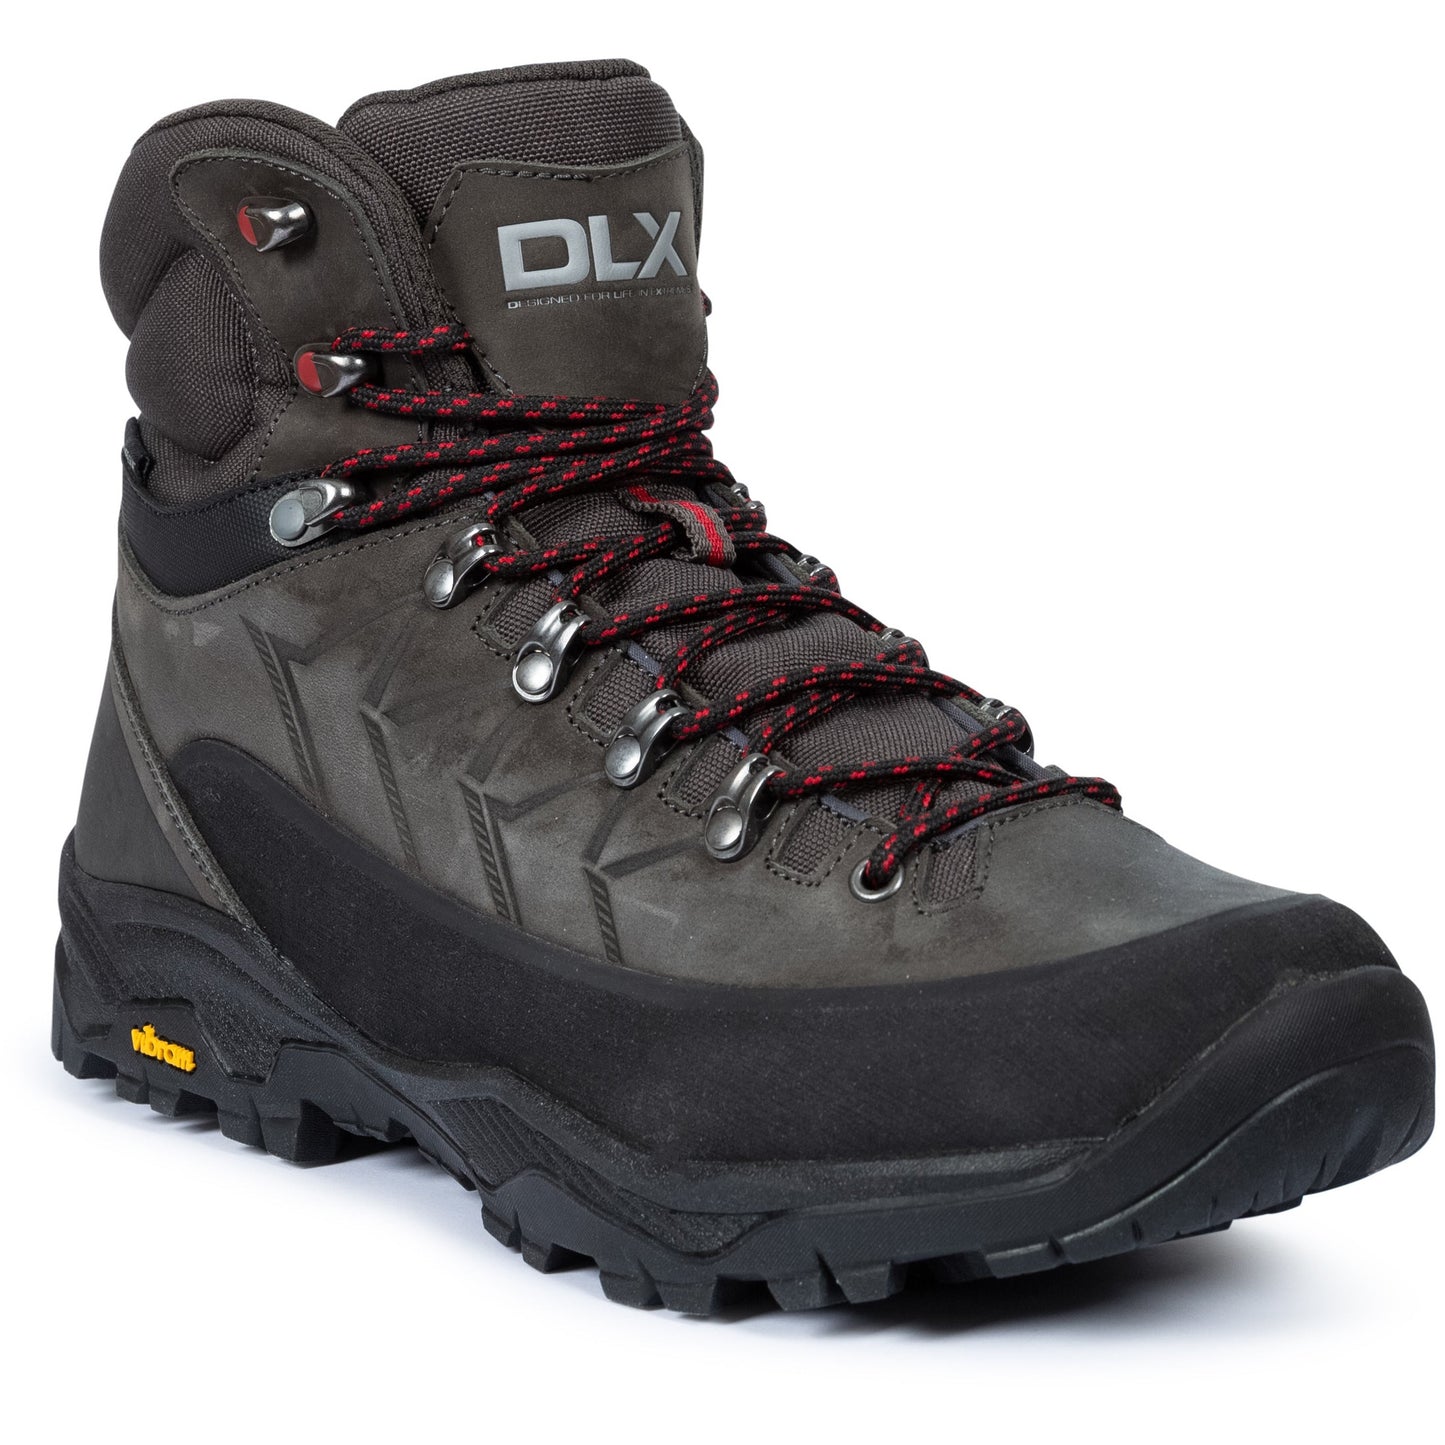 Brody Men's DLX Waterproof Hiking Boot in Grey